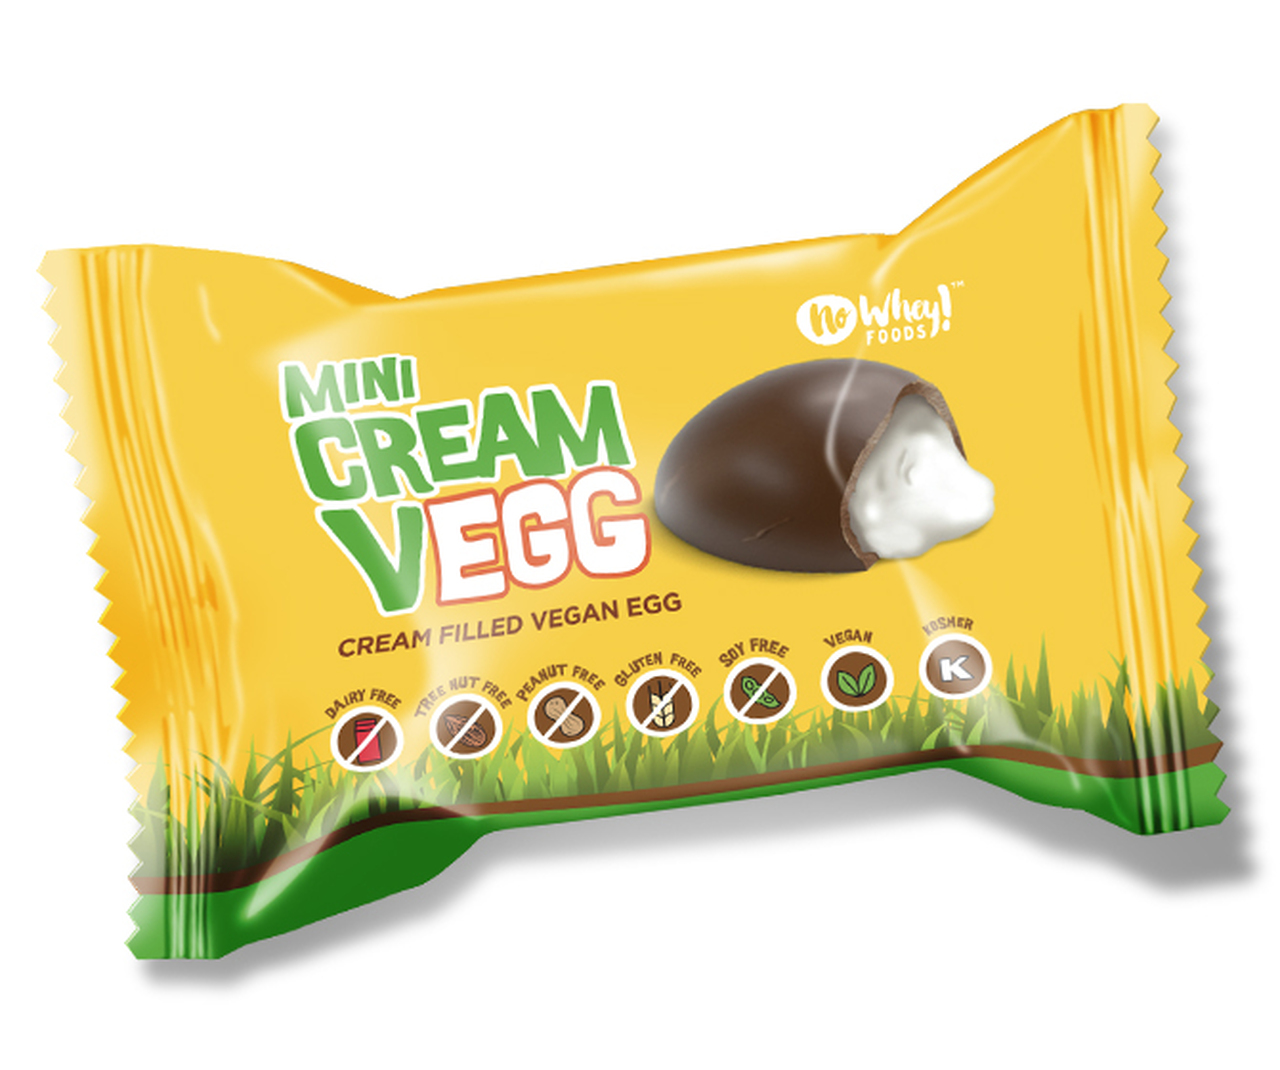 No Whey vegan cream egg candy